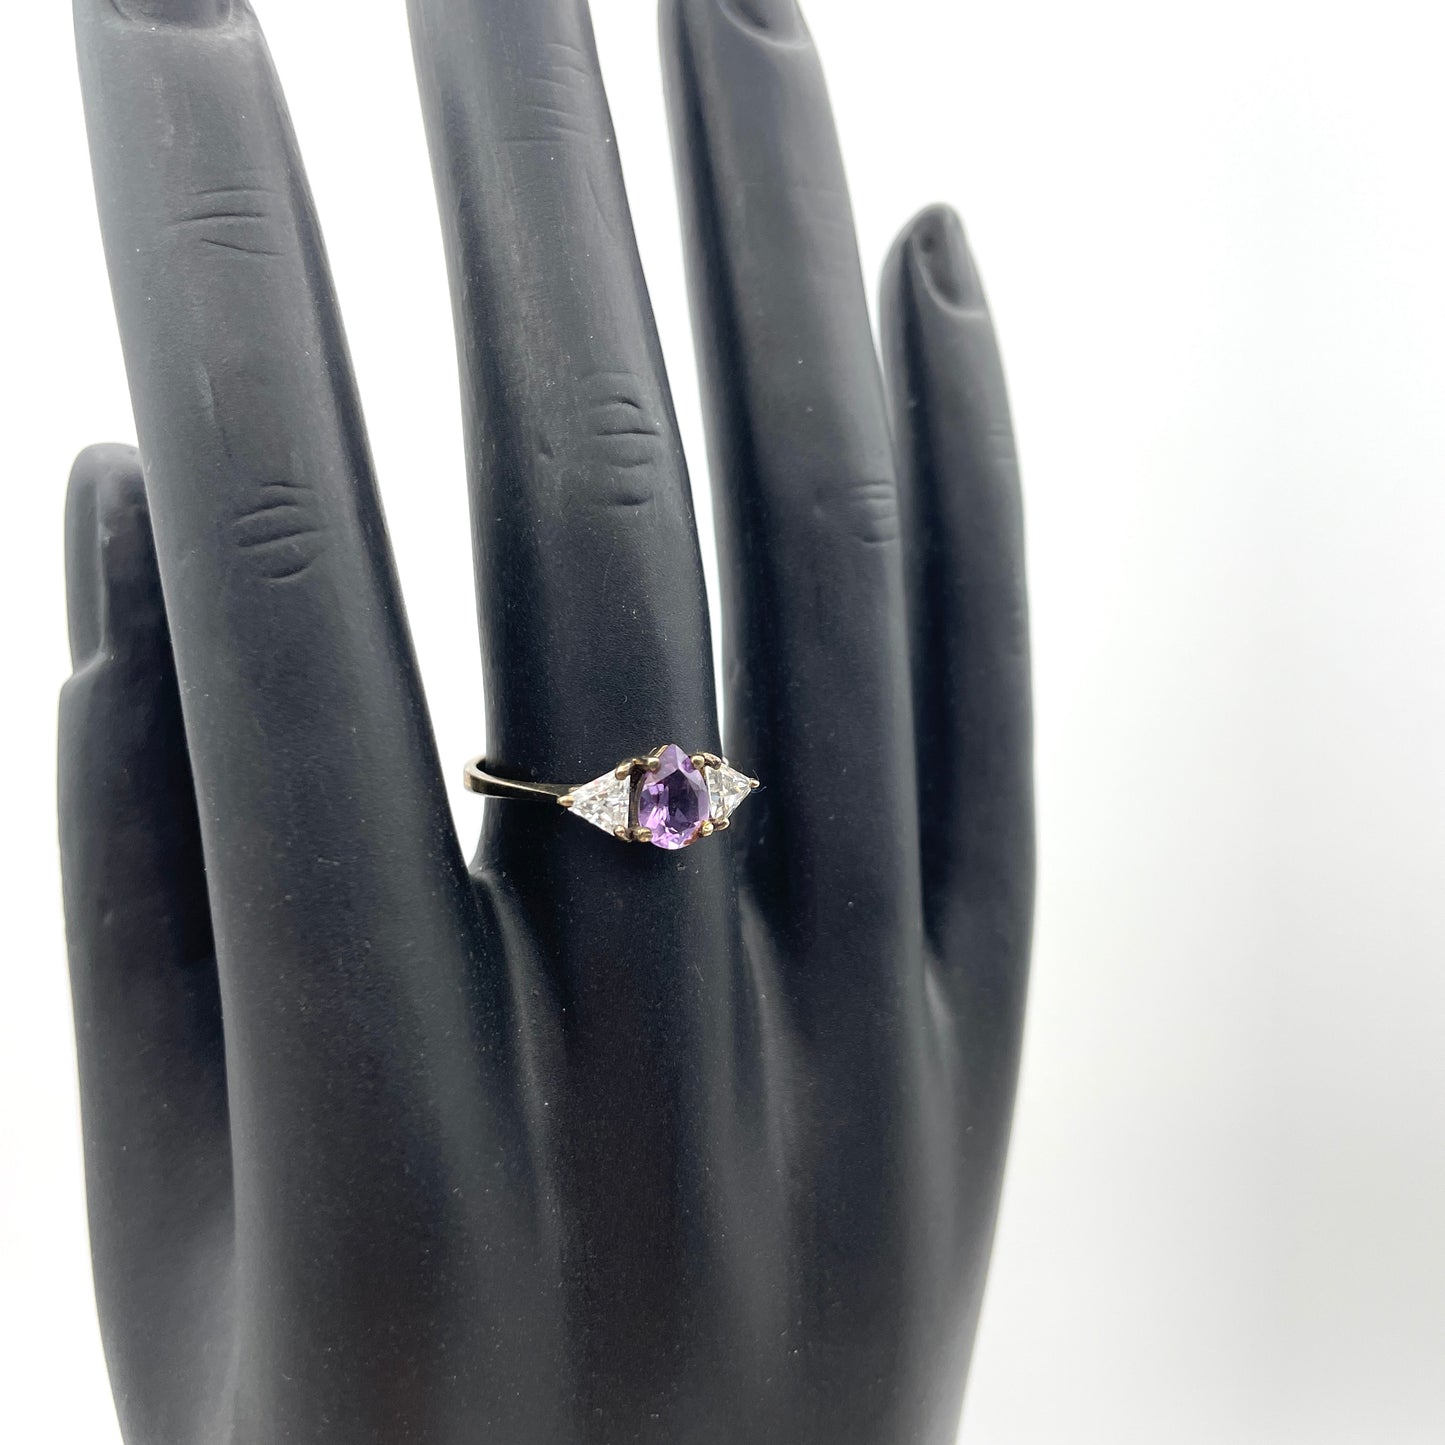 Vintage Sterling Amethyst & Crystal Ring - Size 8.5